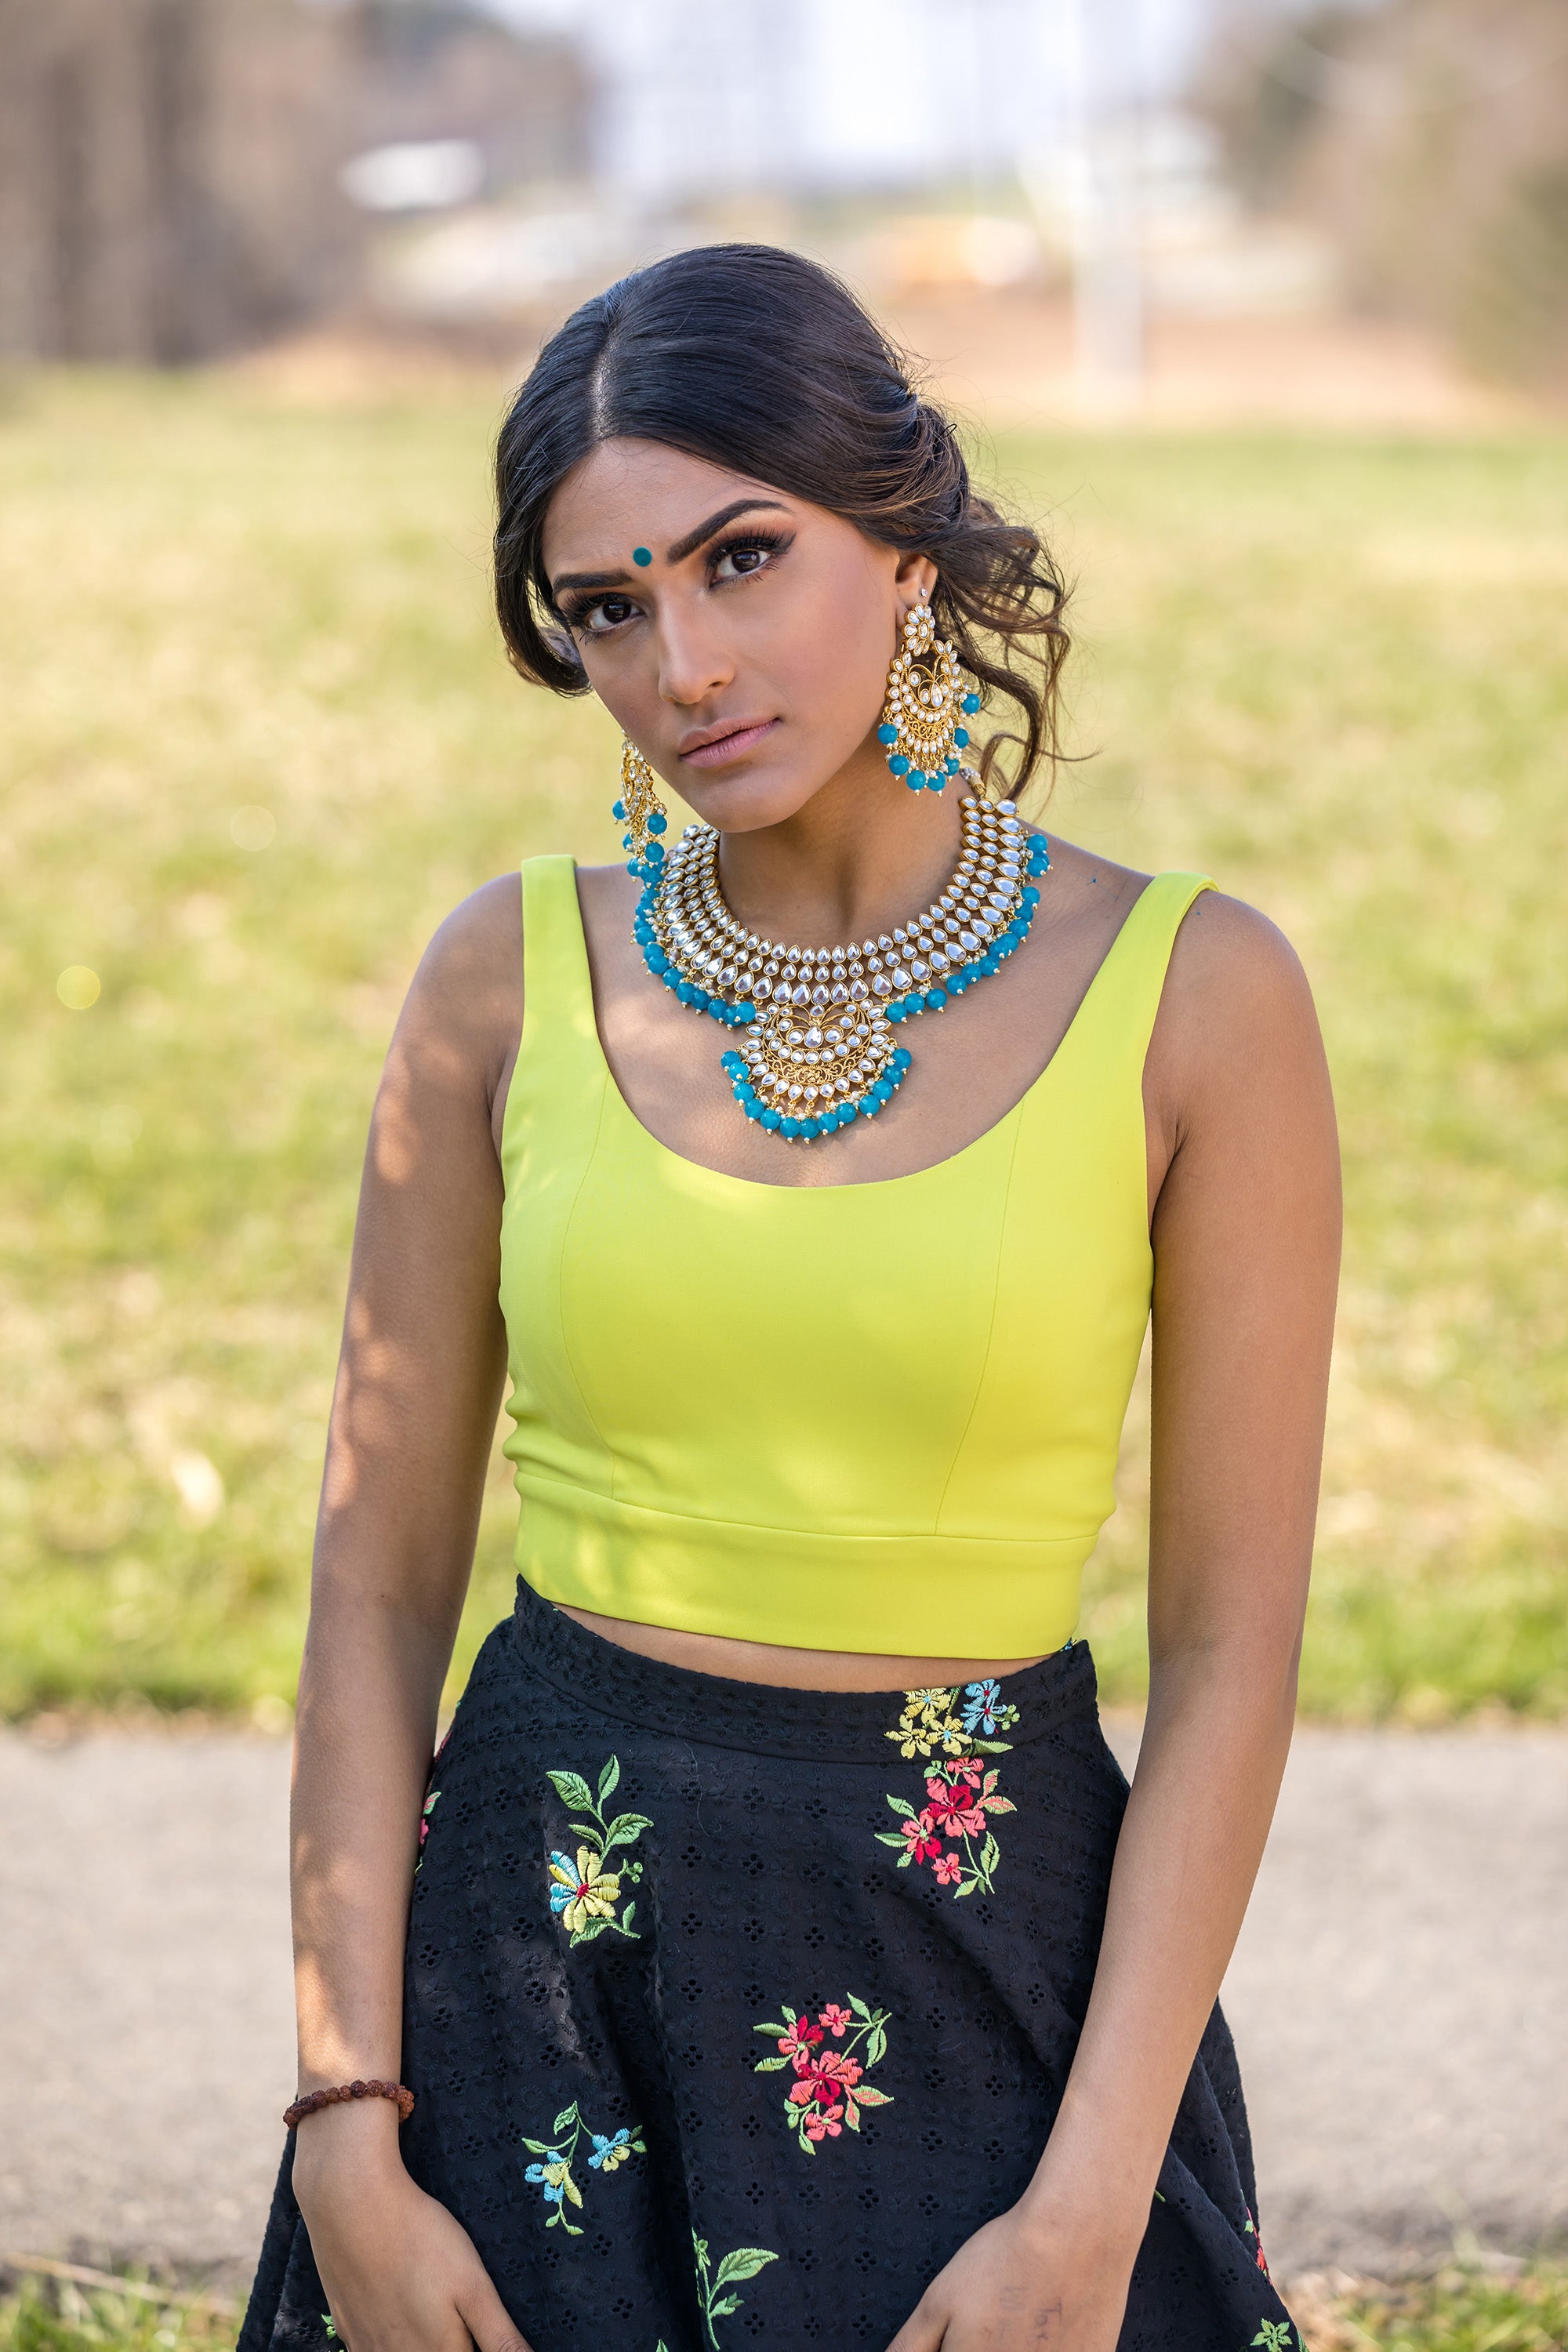 SYRAH Stretch Lengha Top - Front View - Harleen Kaur - South Asian Womenswear